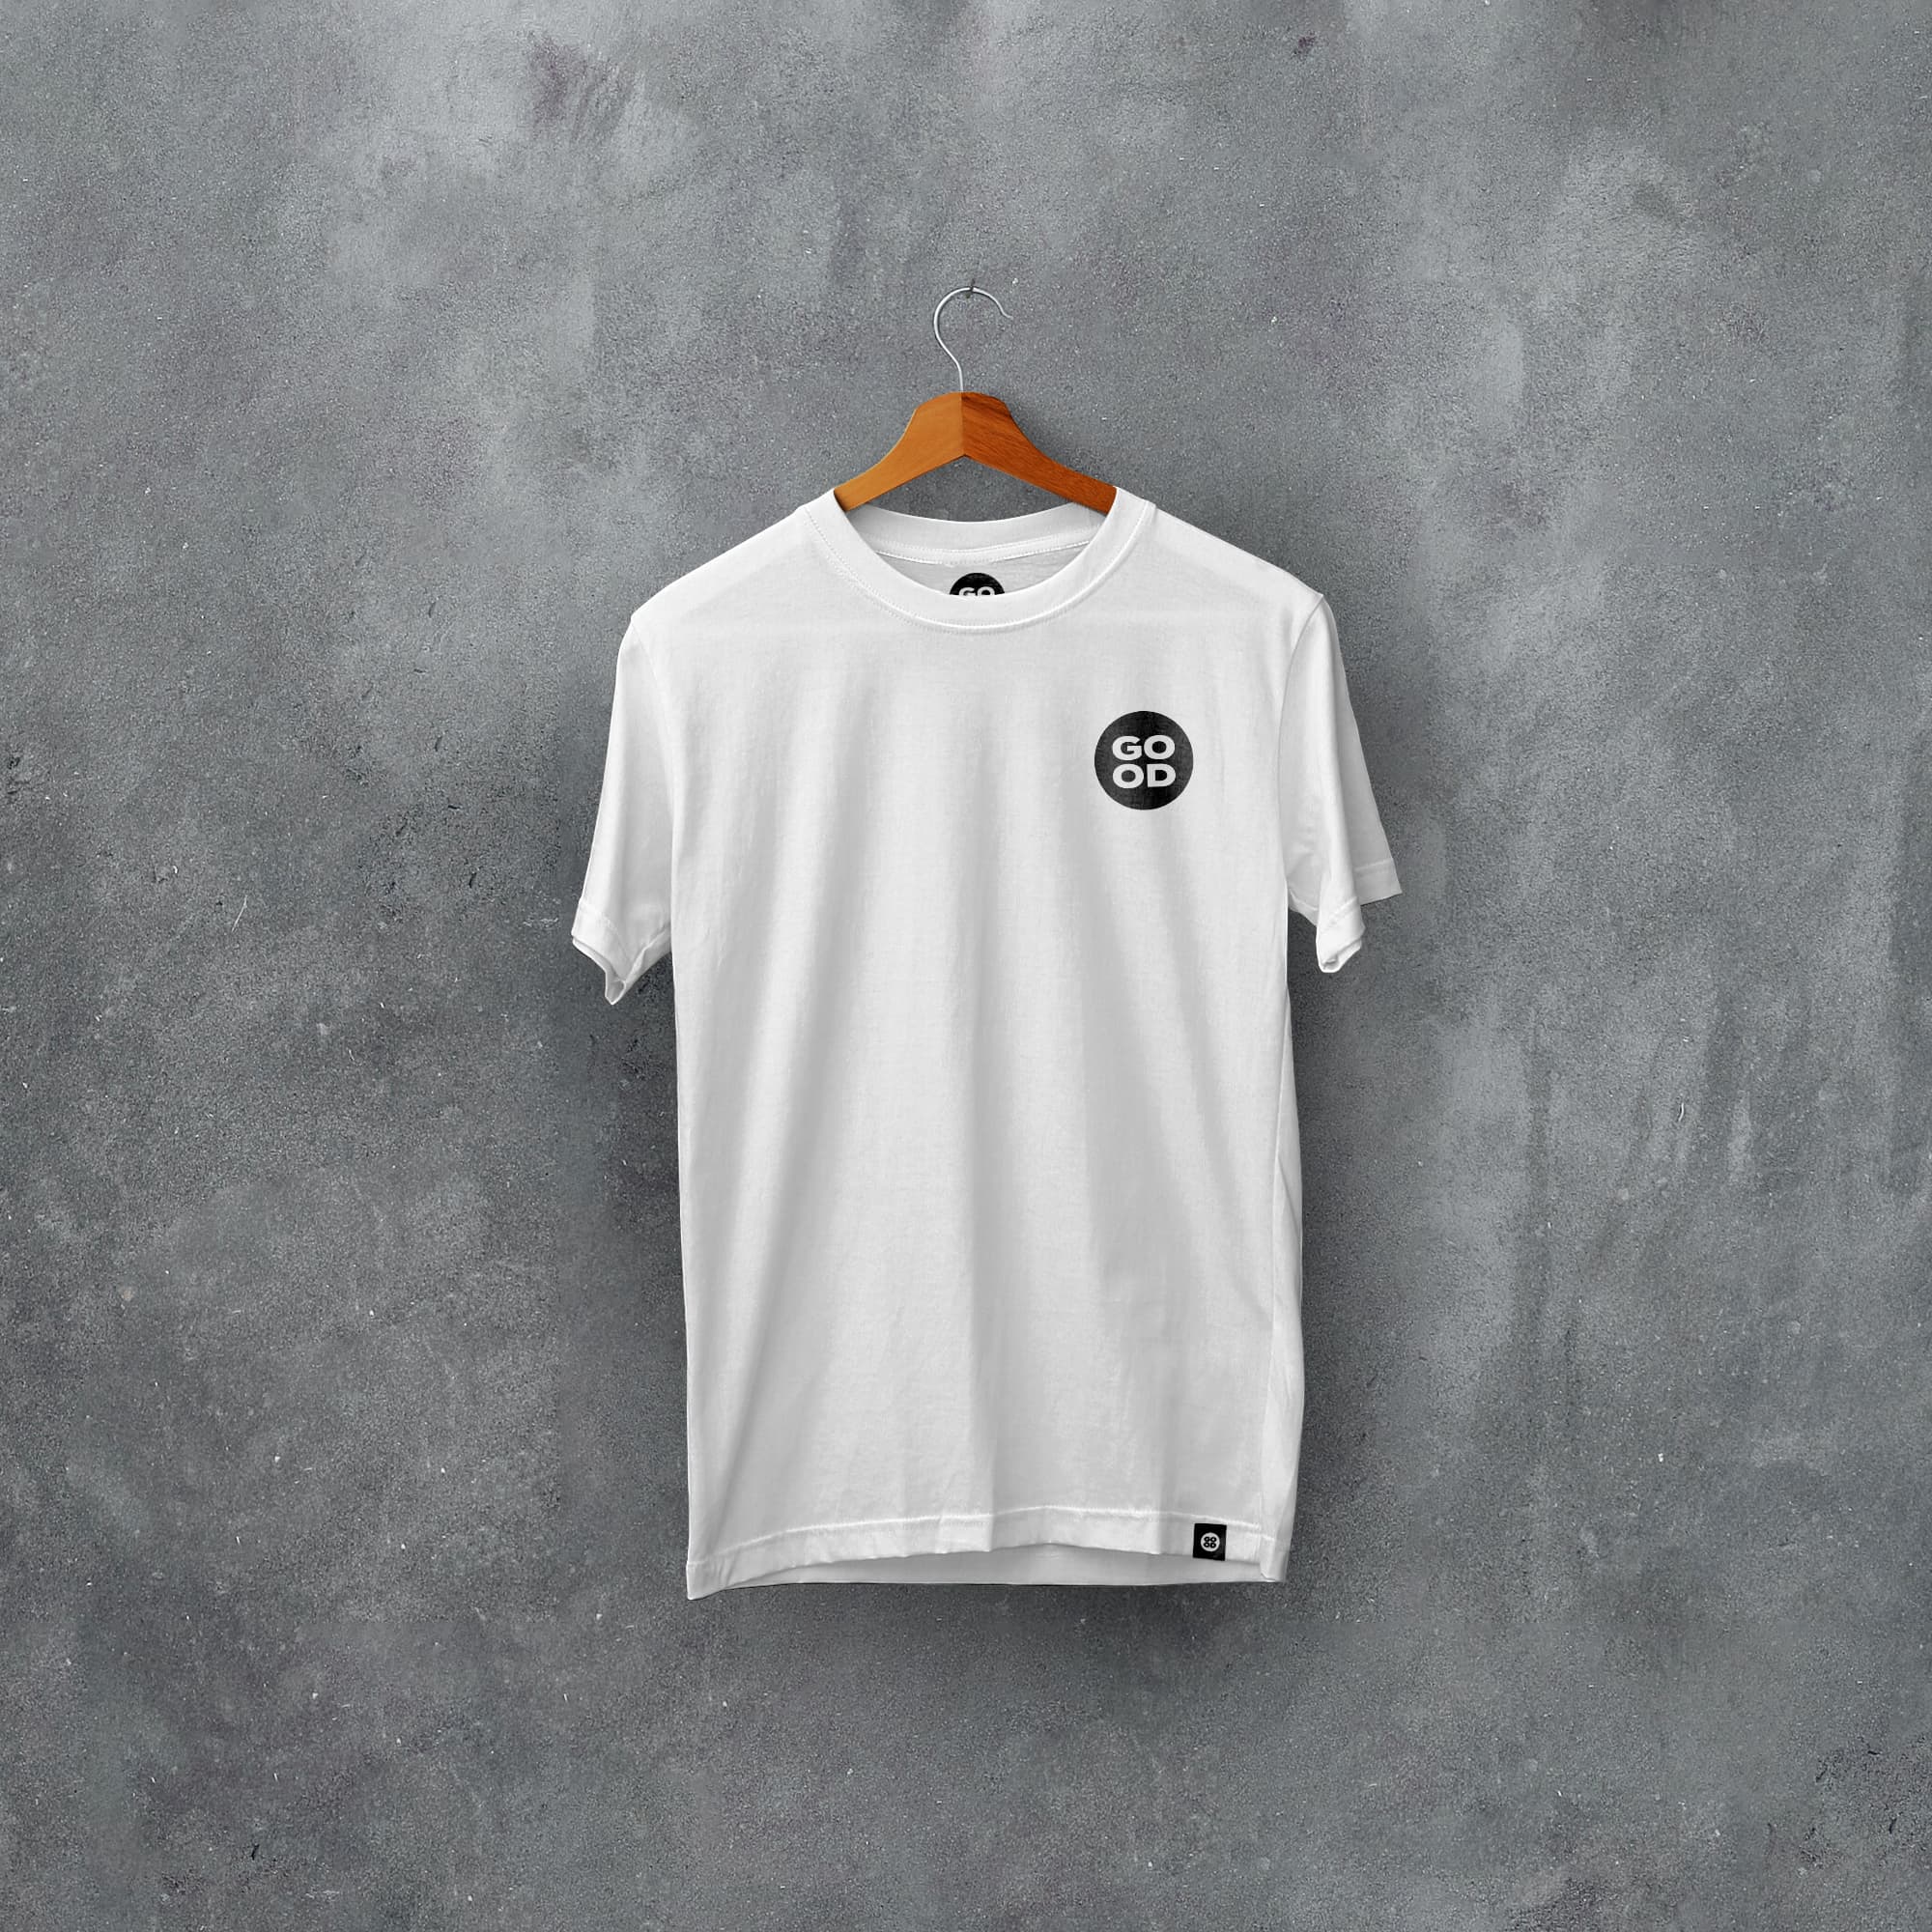 Lincoln Classic Kits Football T-Shirt